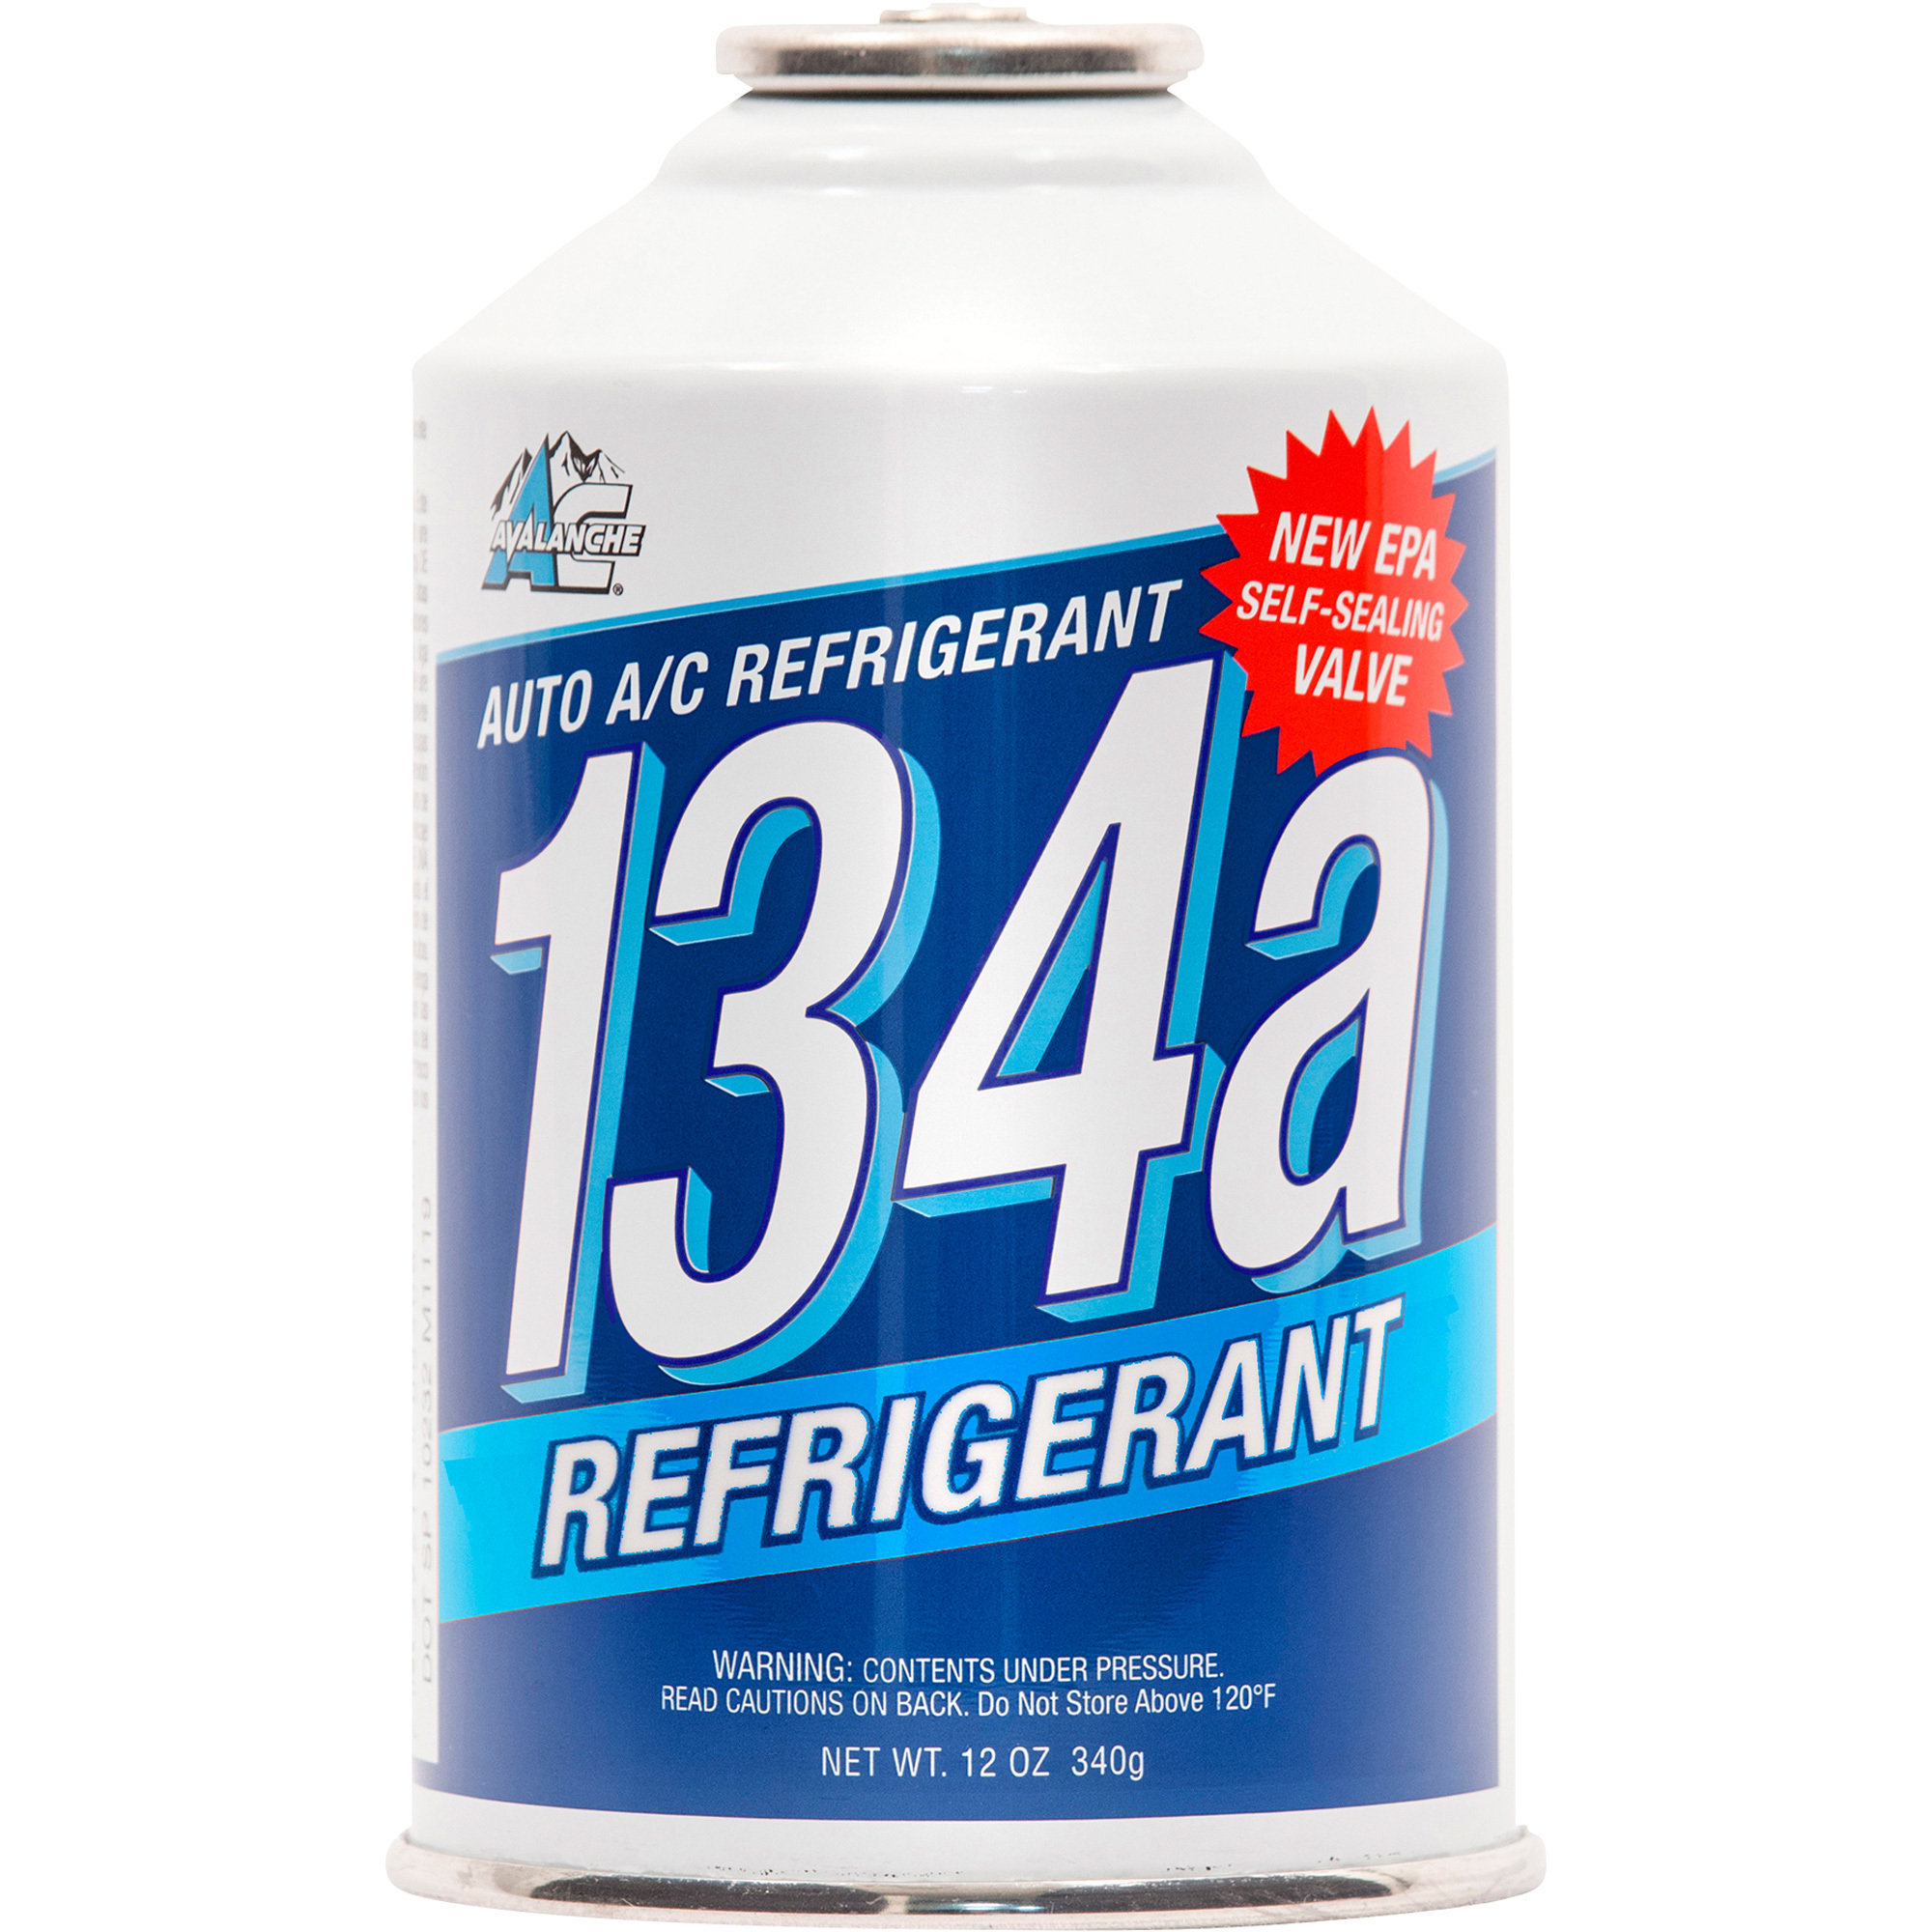 Avalanche Auto A/C Refrigerant 134a â 12-Oz. Can